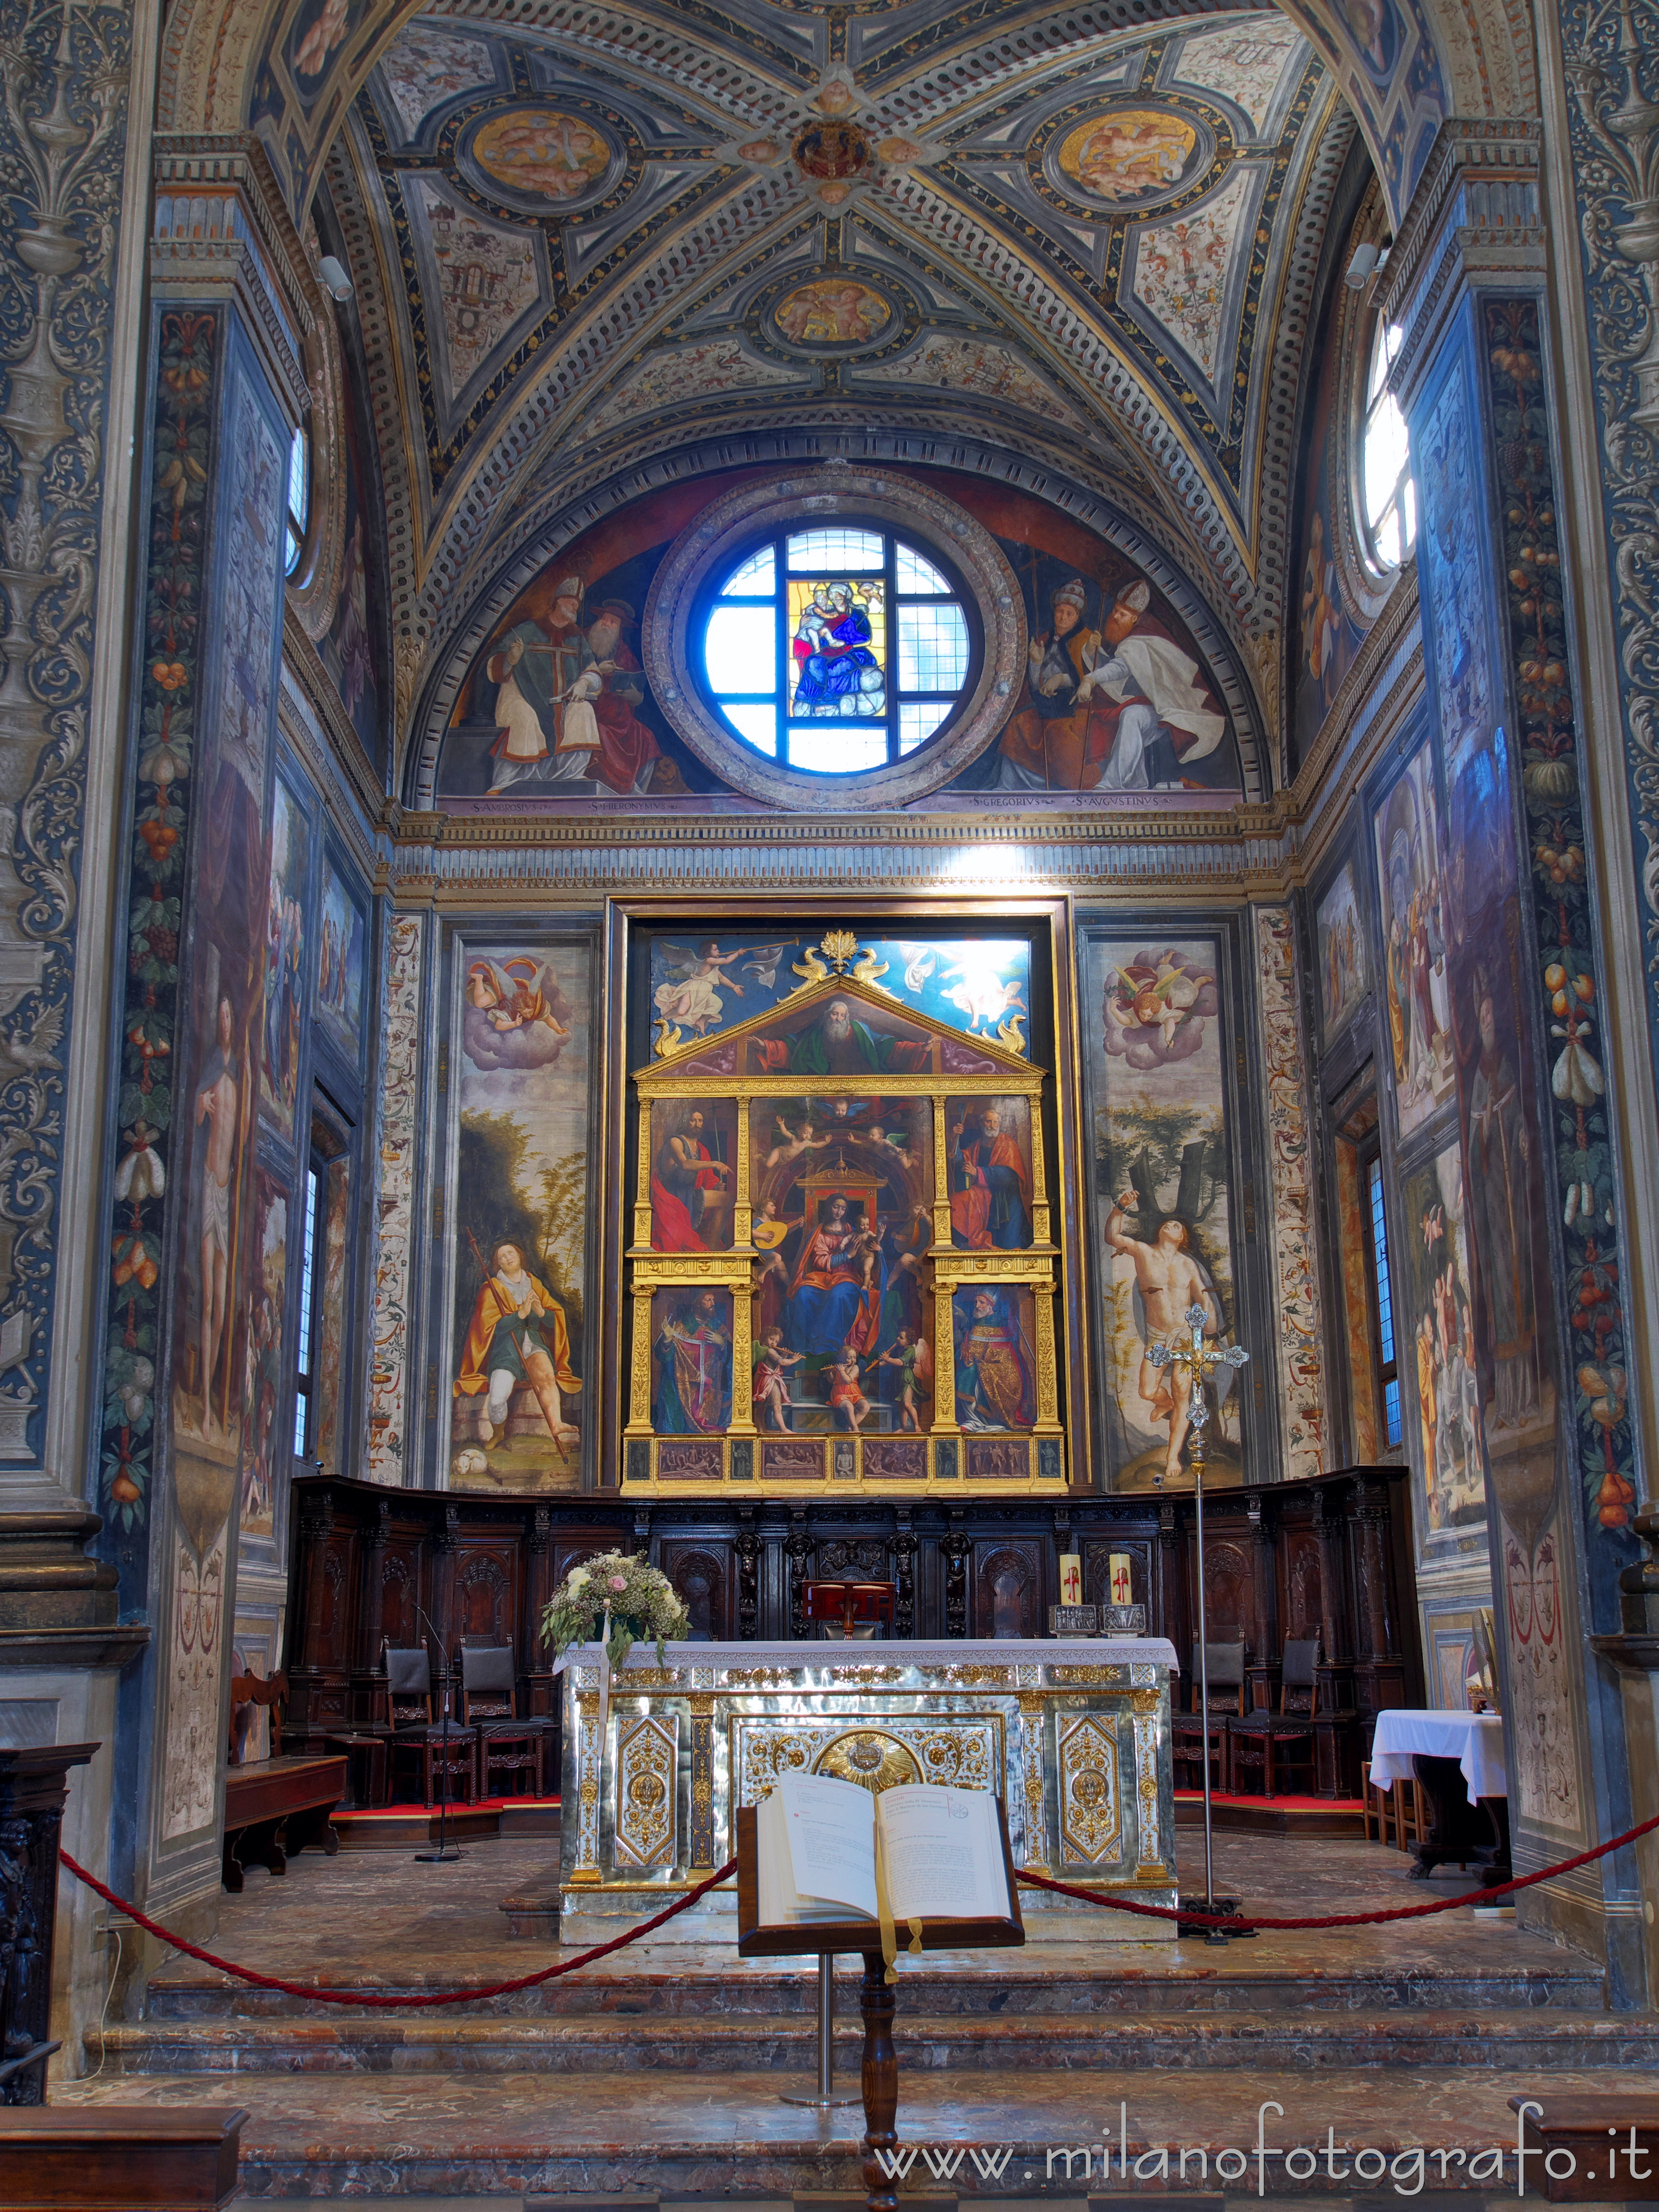 Legnano (Milan, Italy): Main Chapel of the Basilica of San Magno - Legnano (Milan, Italy)